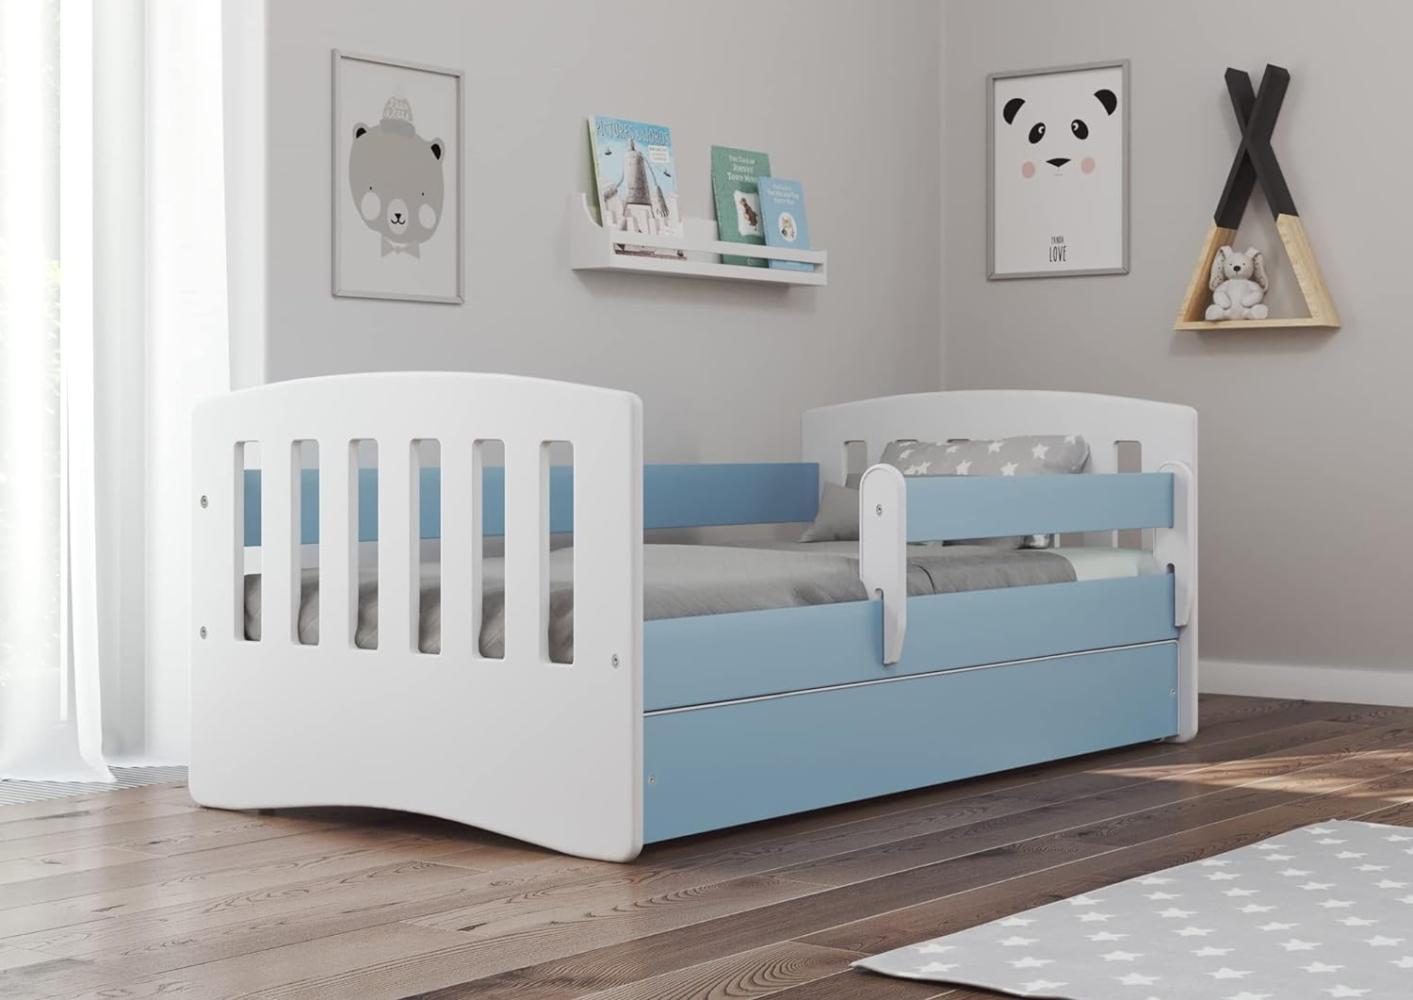 Bjird 'Classic' Kinderbett 80 x 160 cm, Blau, inkl. Rausfallschutz, Lattenrost und Bettschublade Bild 1